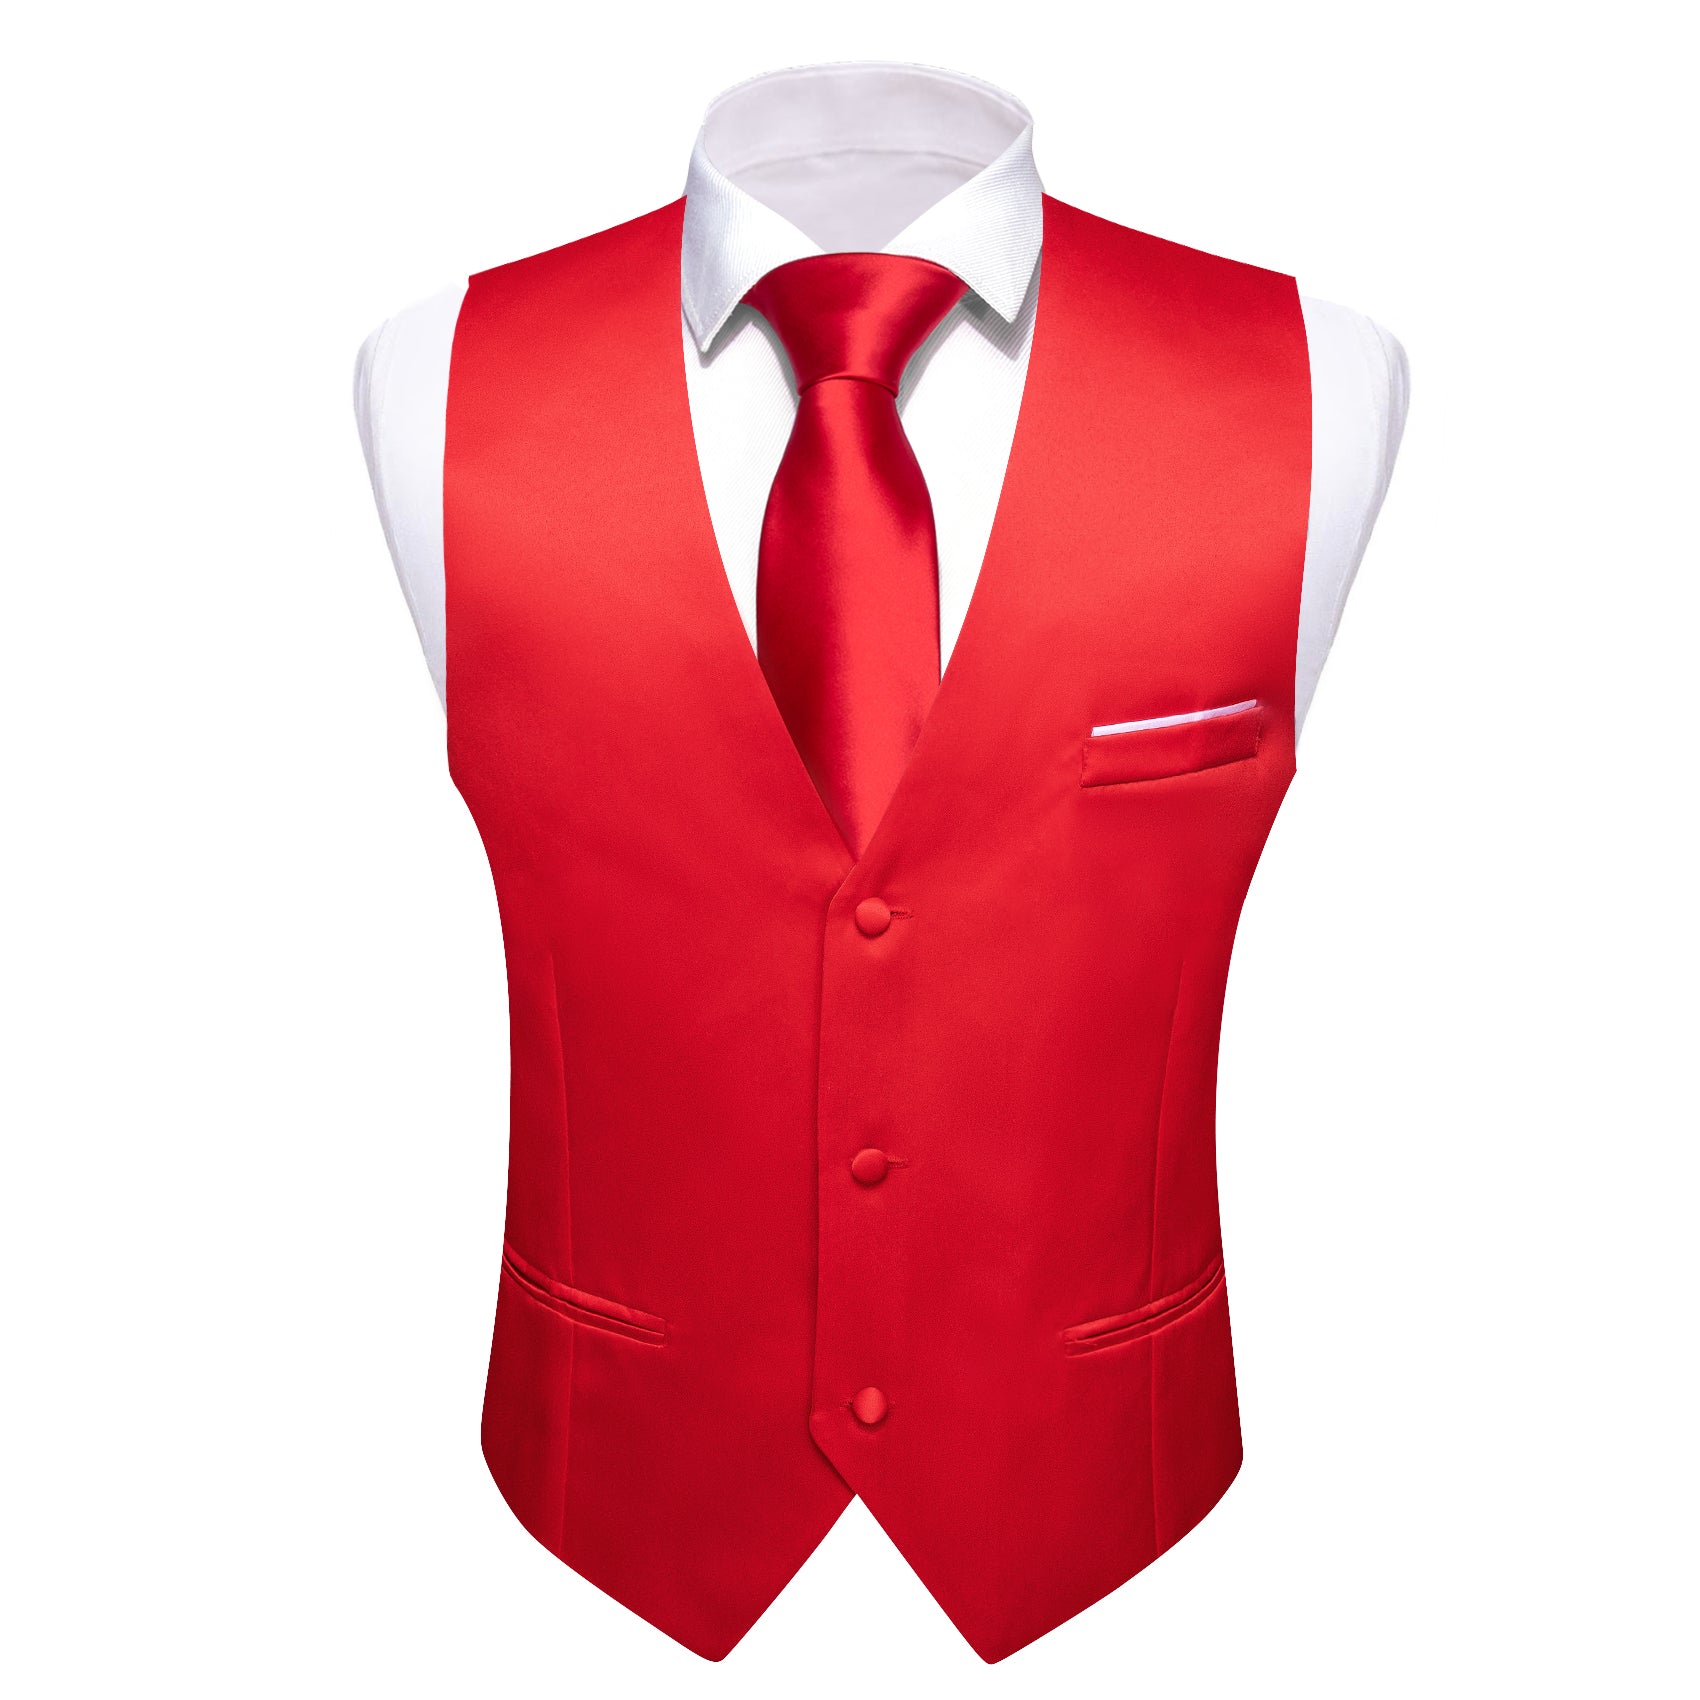 Barry.wang Men's Work Vest Red Solid Silk Business Vest Suit